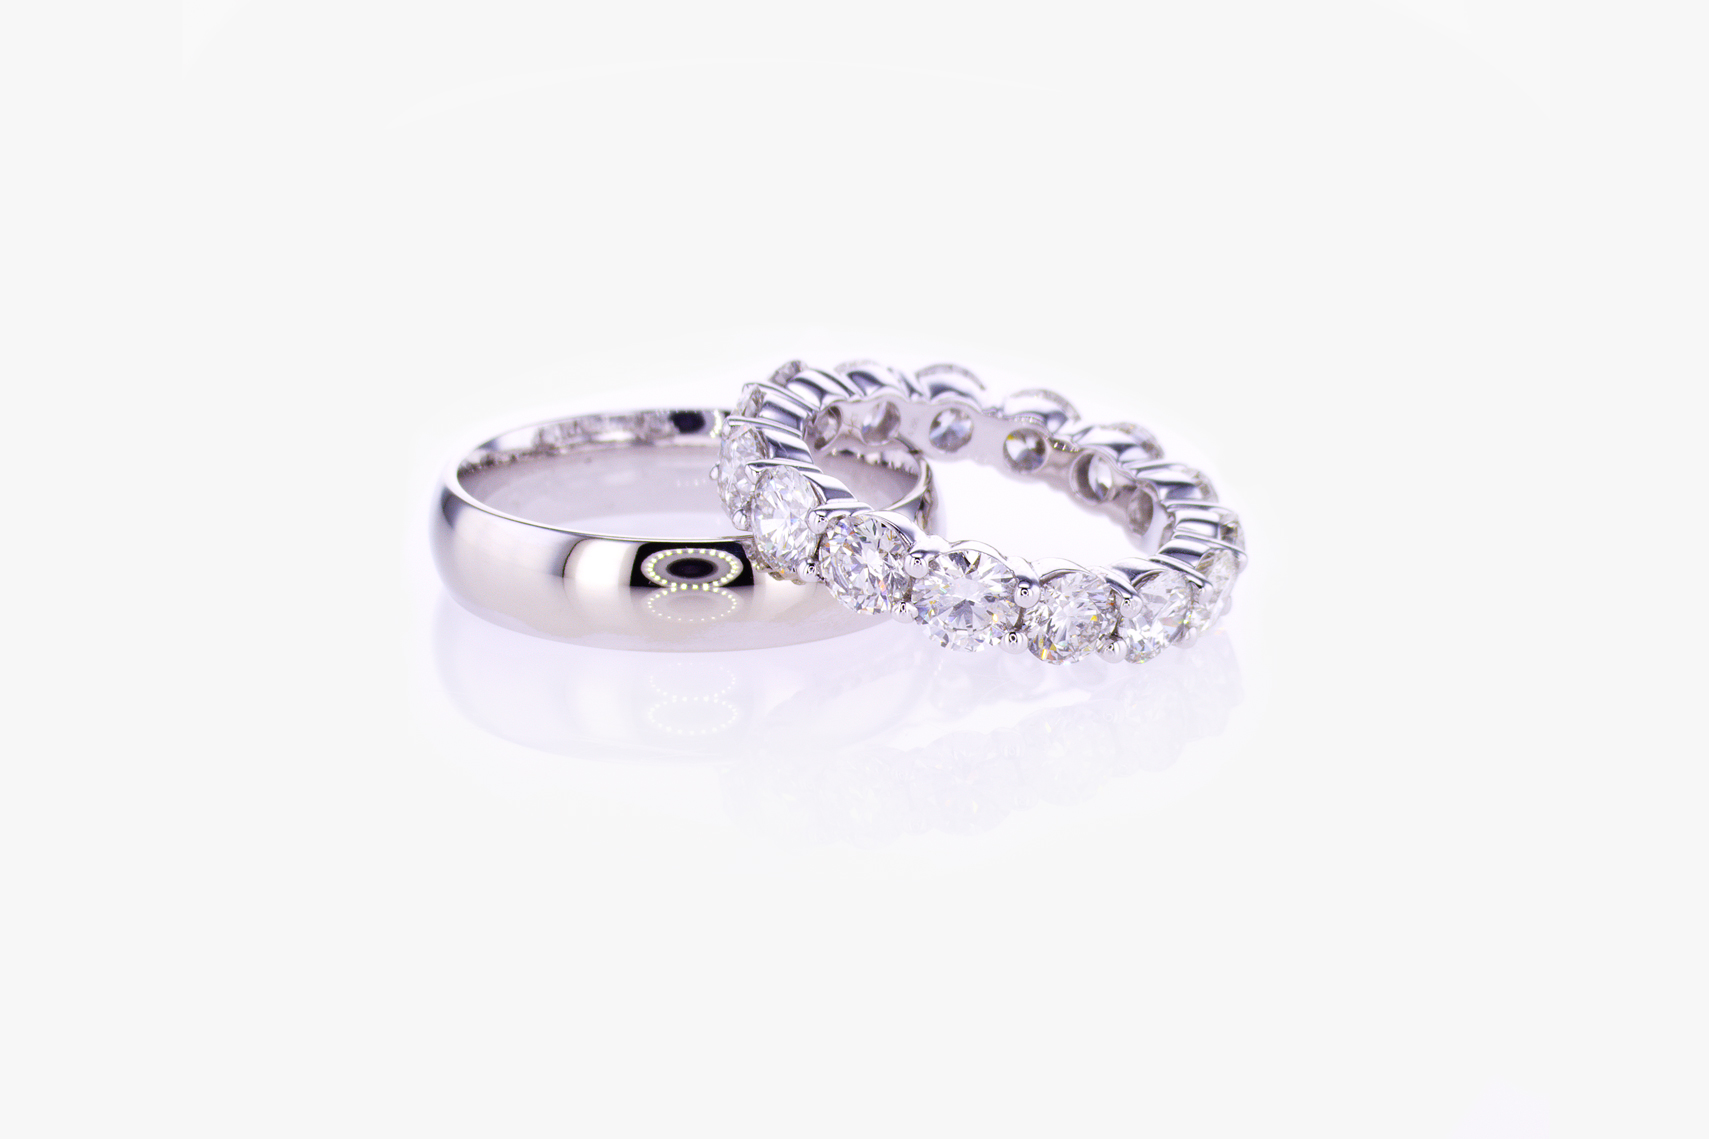 Market Street Diamonds bridal rings